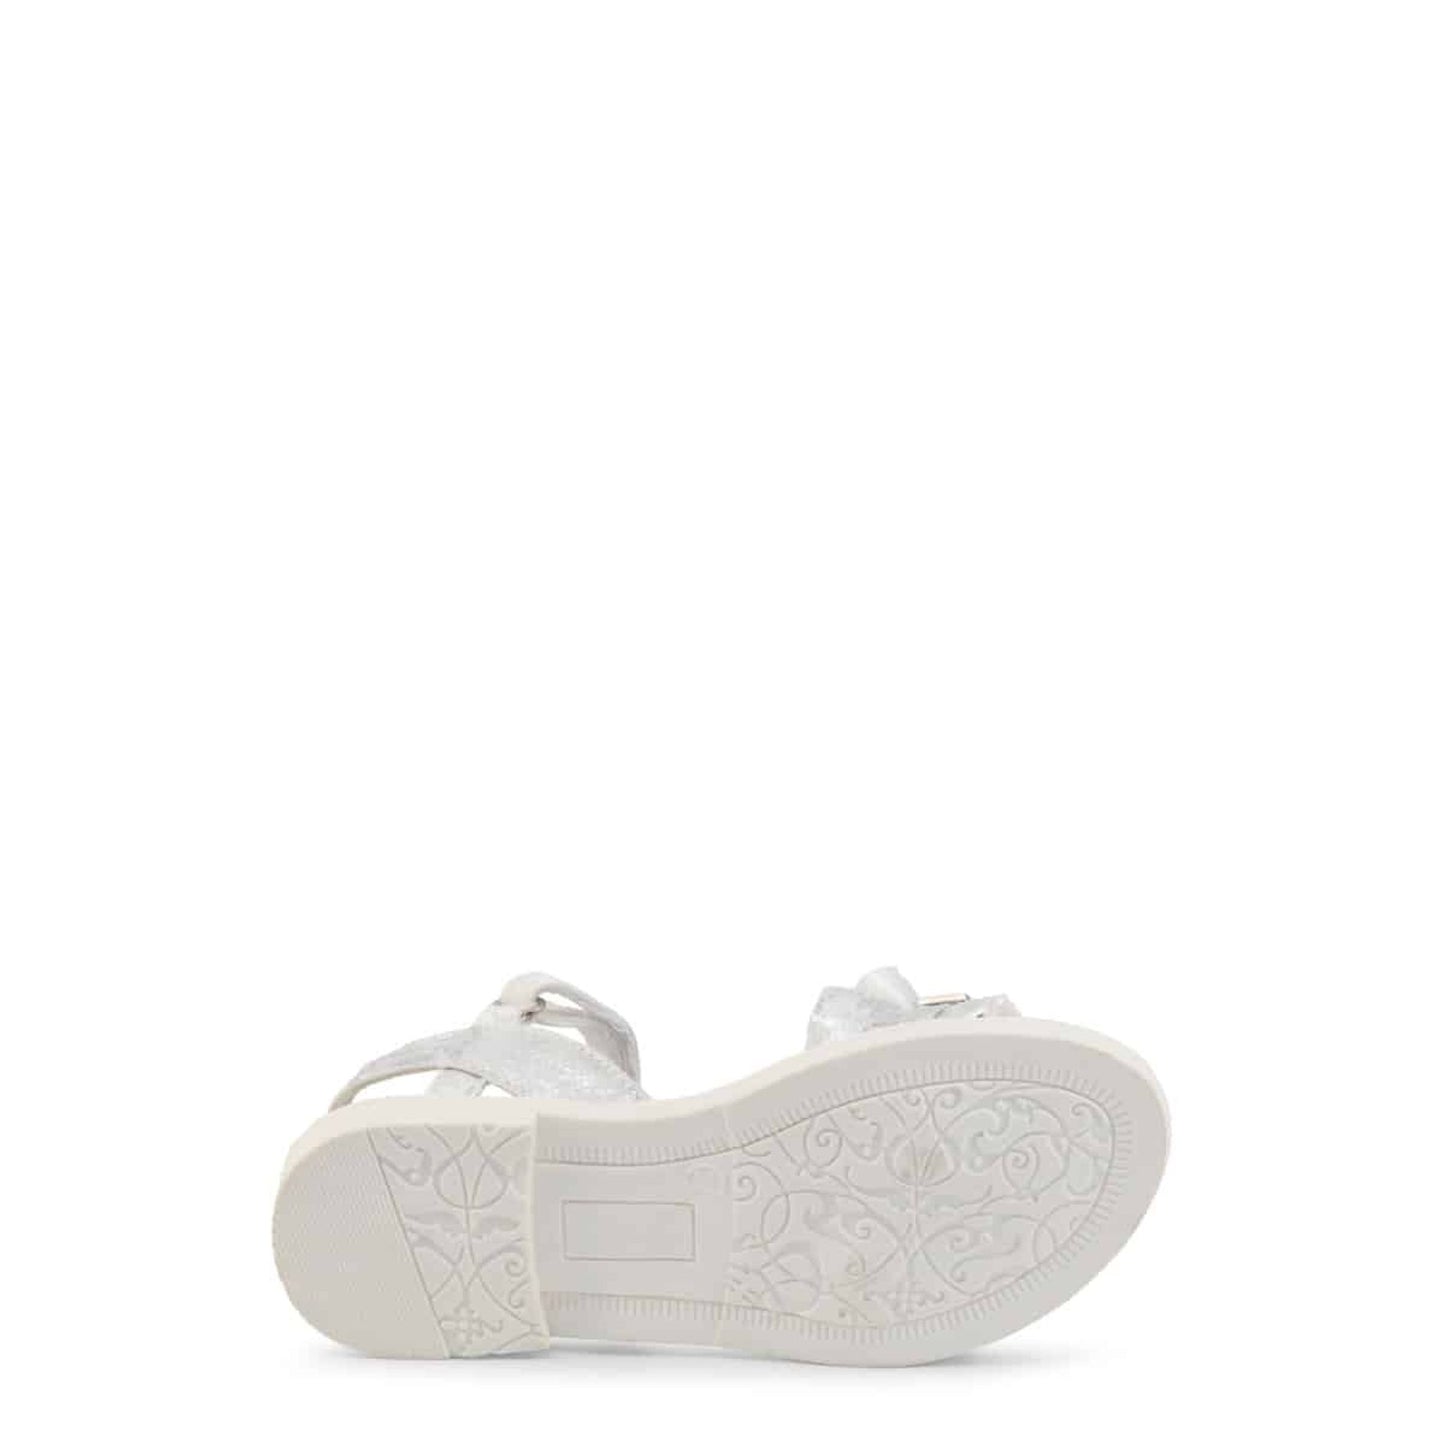 Sandali bambina bianchi con velcro e strass